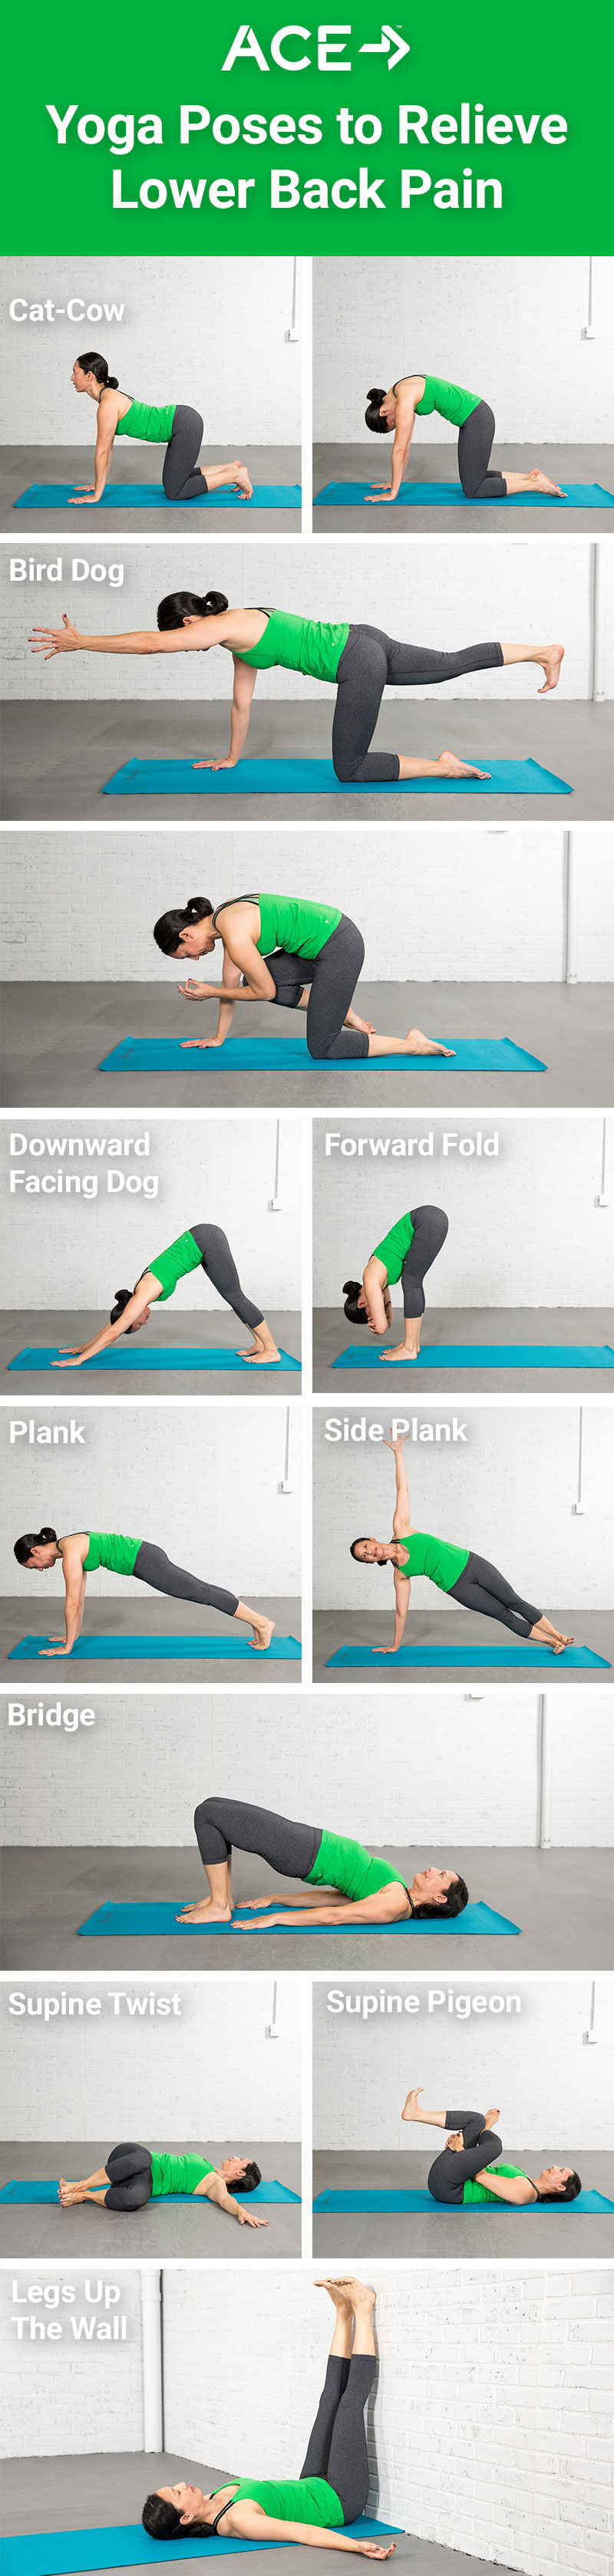 https://ik.imagekit.io/02fmeo4exvw/expert-articles/2017/09/2017-09-19-yoga-poses-to-alleviate-back-pain-poses.jpg